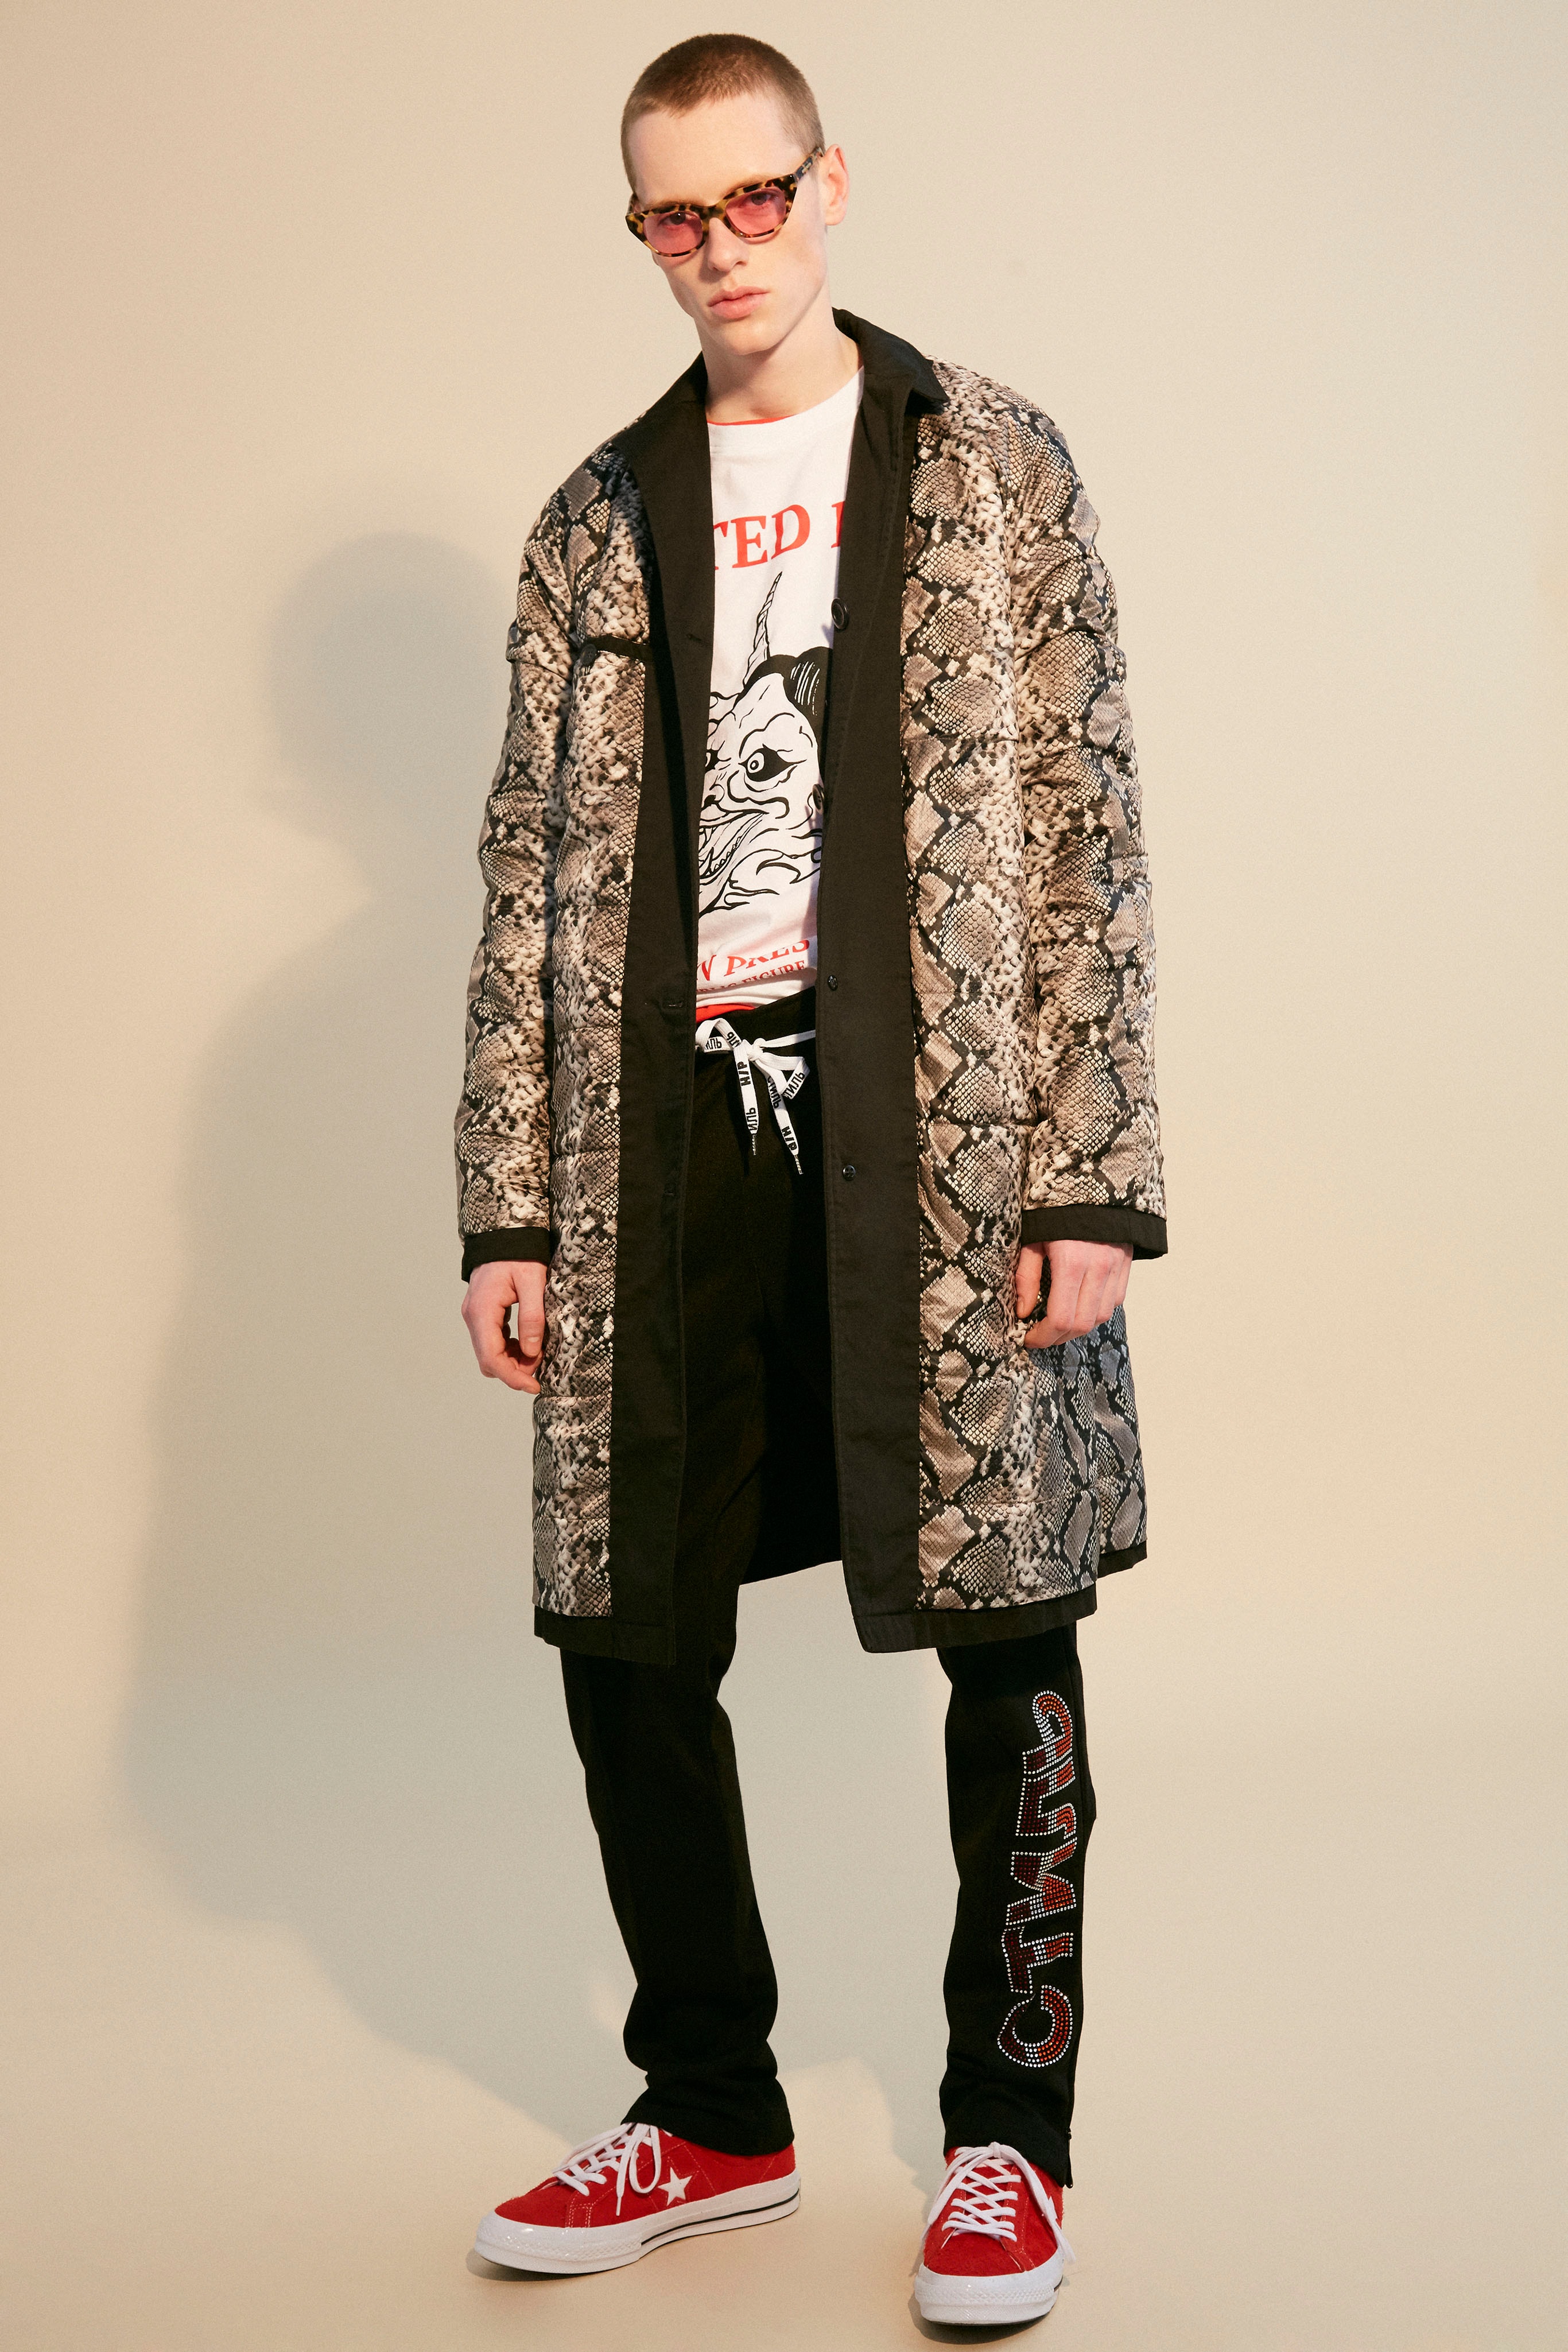 Heron Preston 2018 Fall Winter "PUBLIC FIGURE" Collection Paris Fashion Week Men's